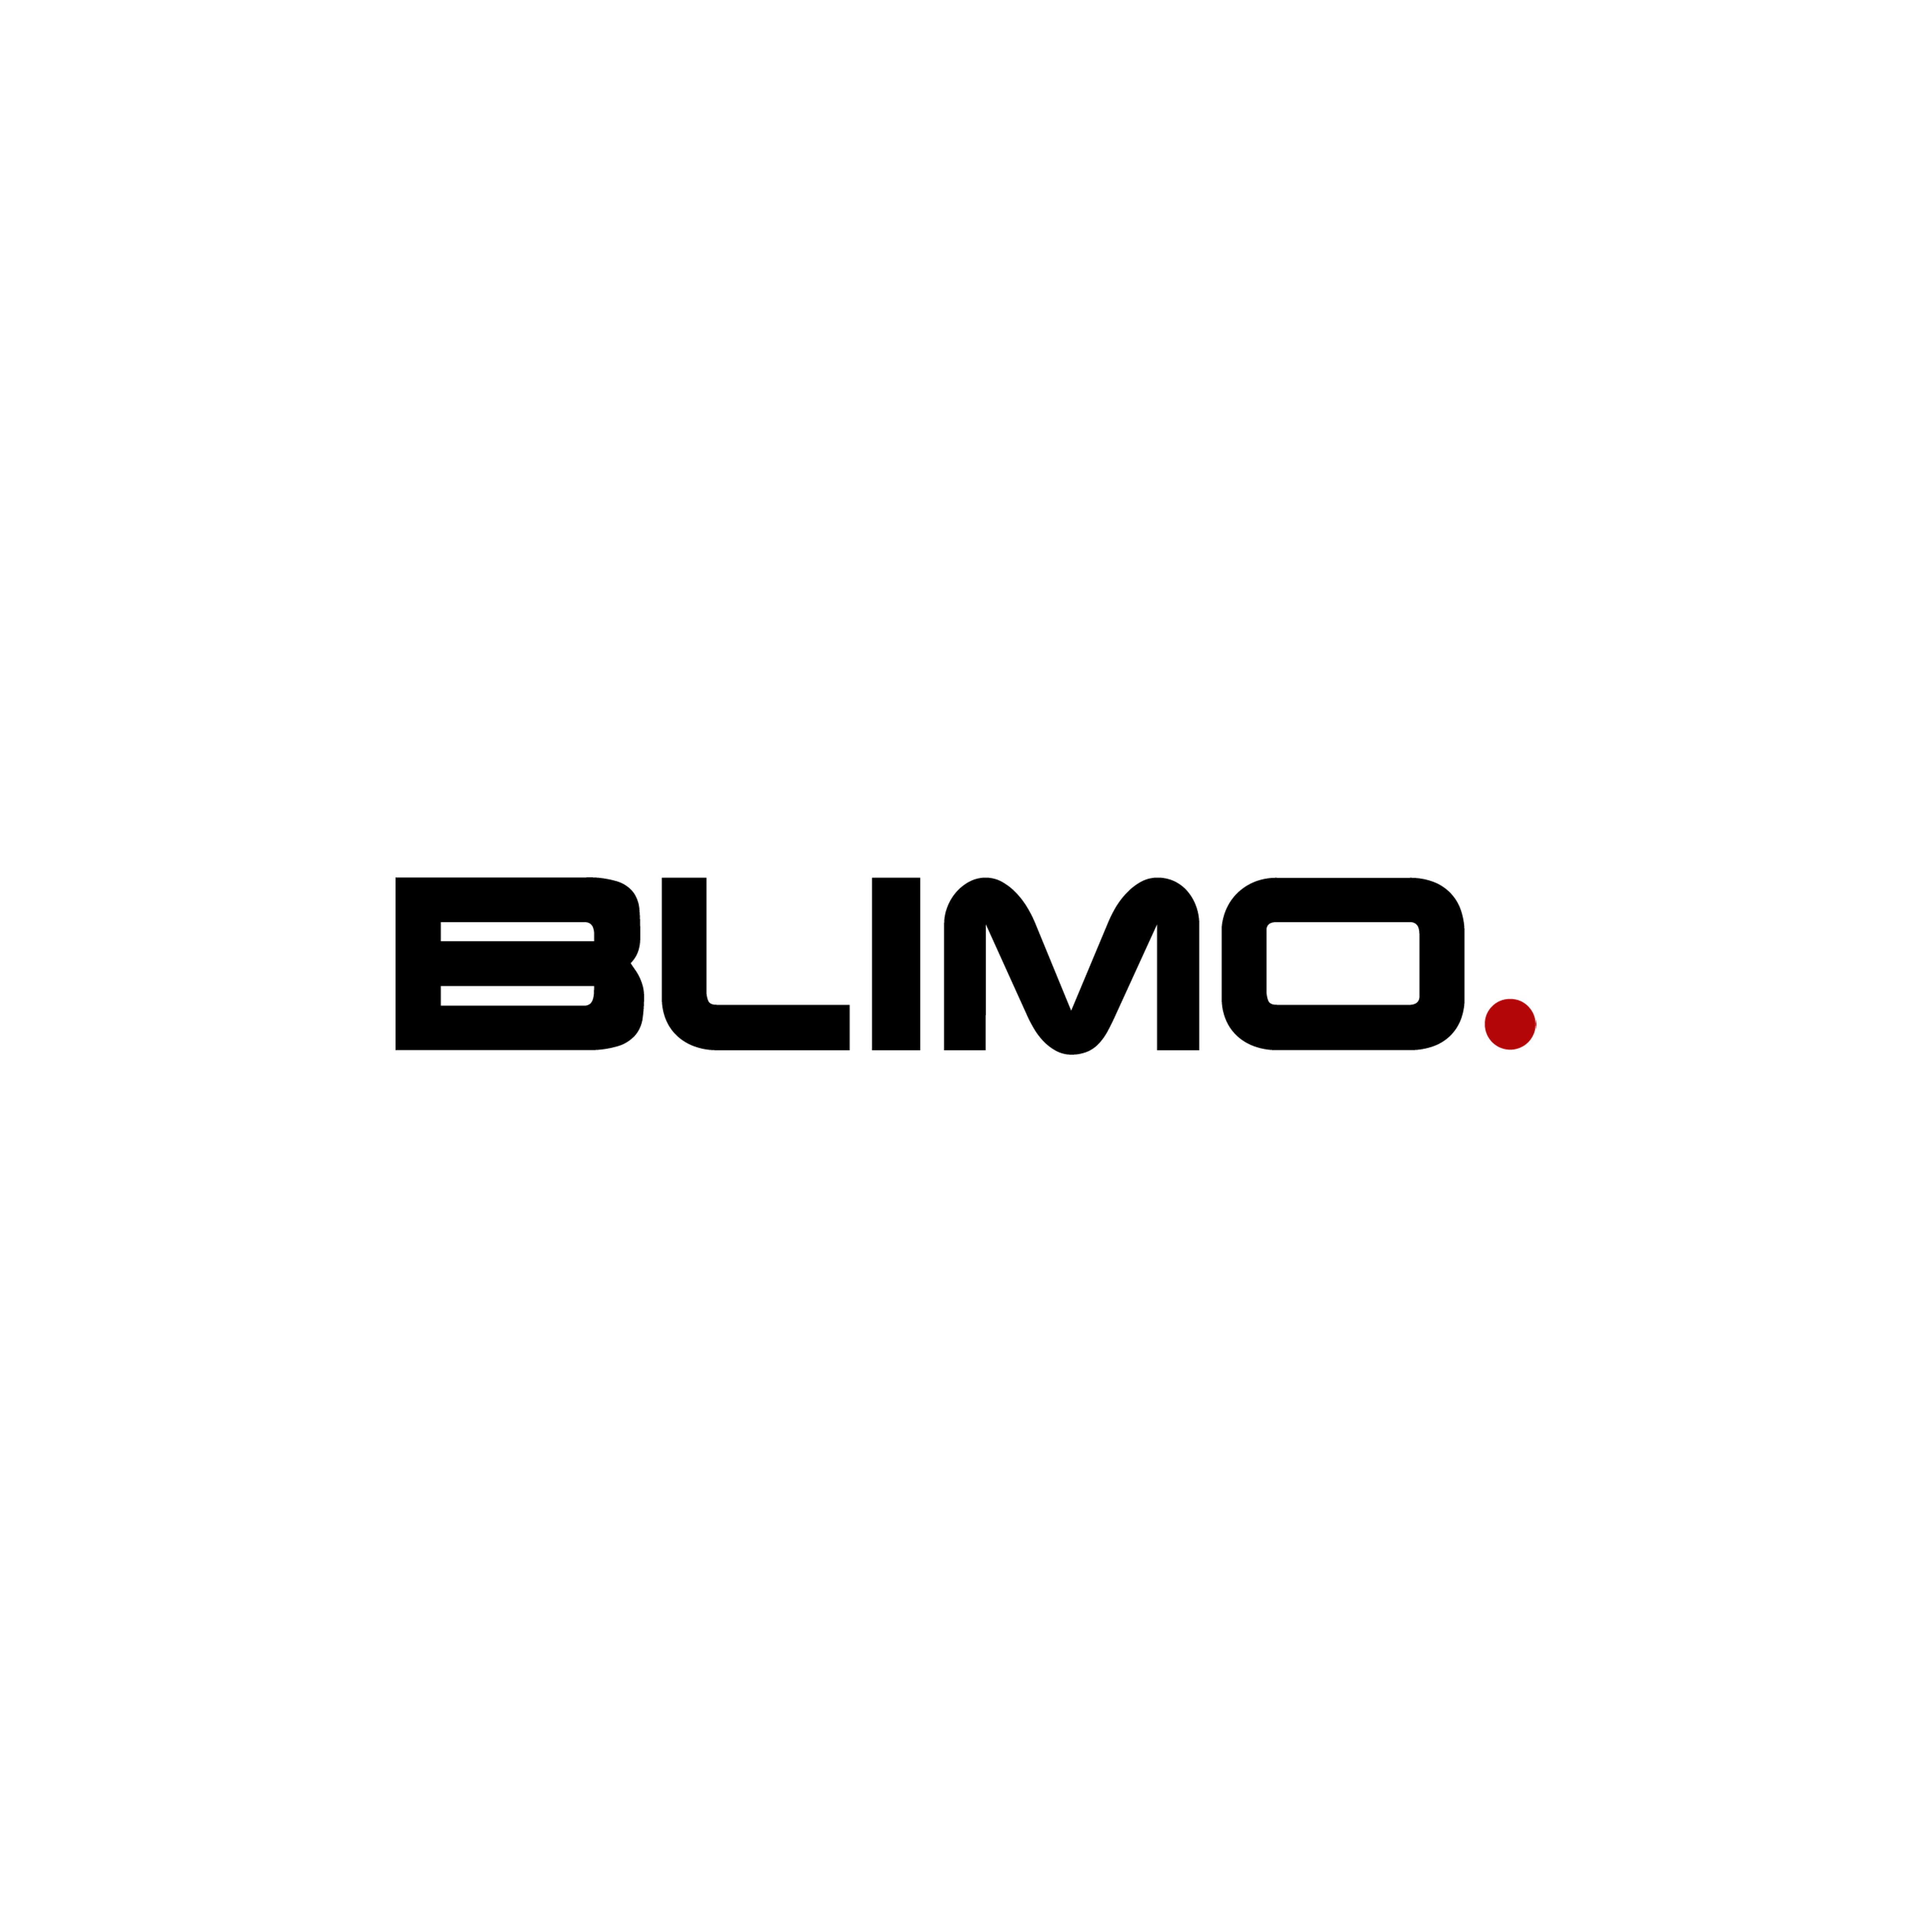 Tuta till Blimo Moto